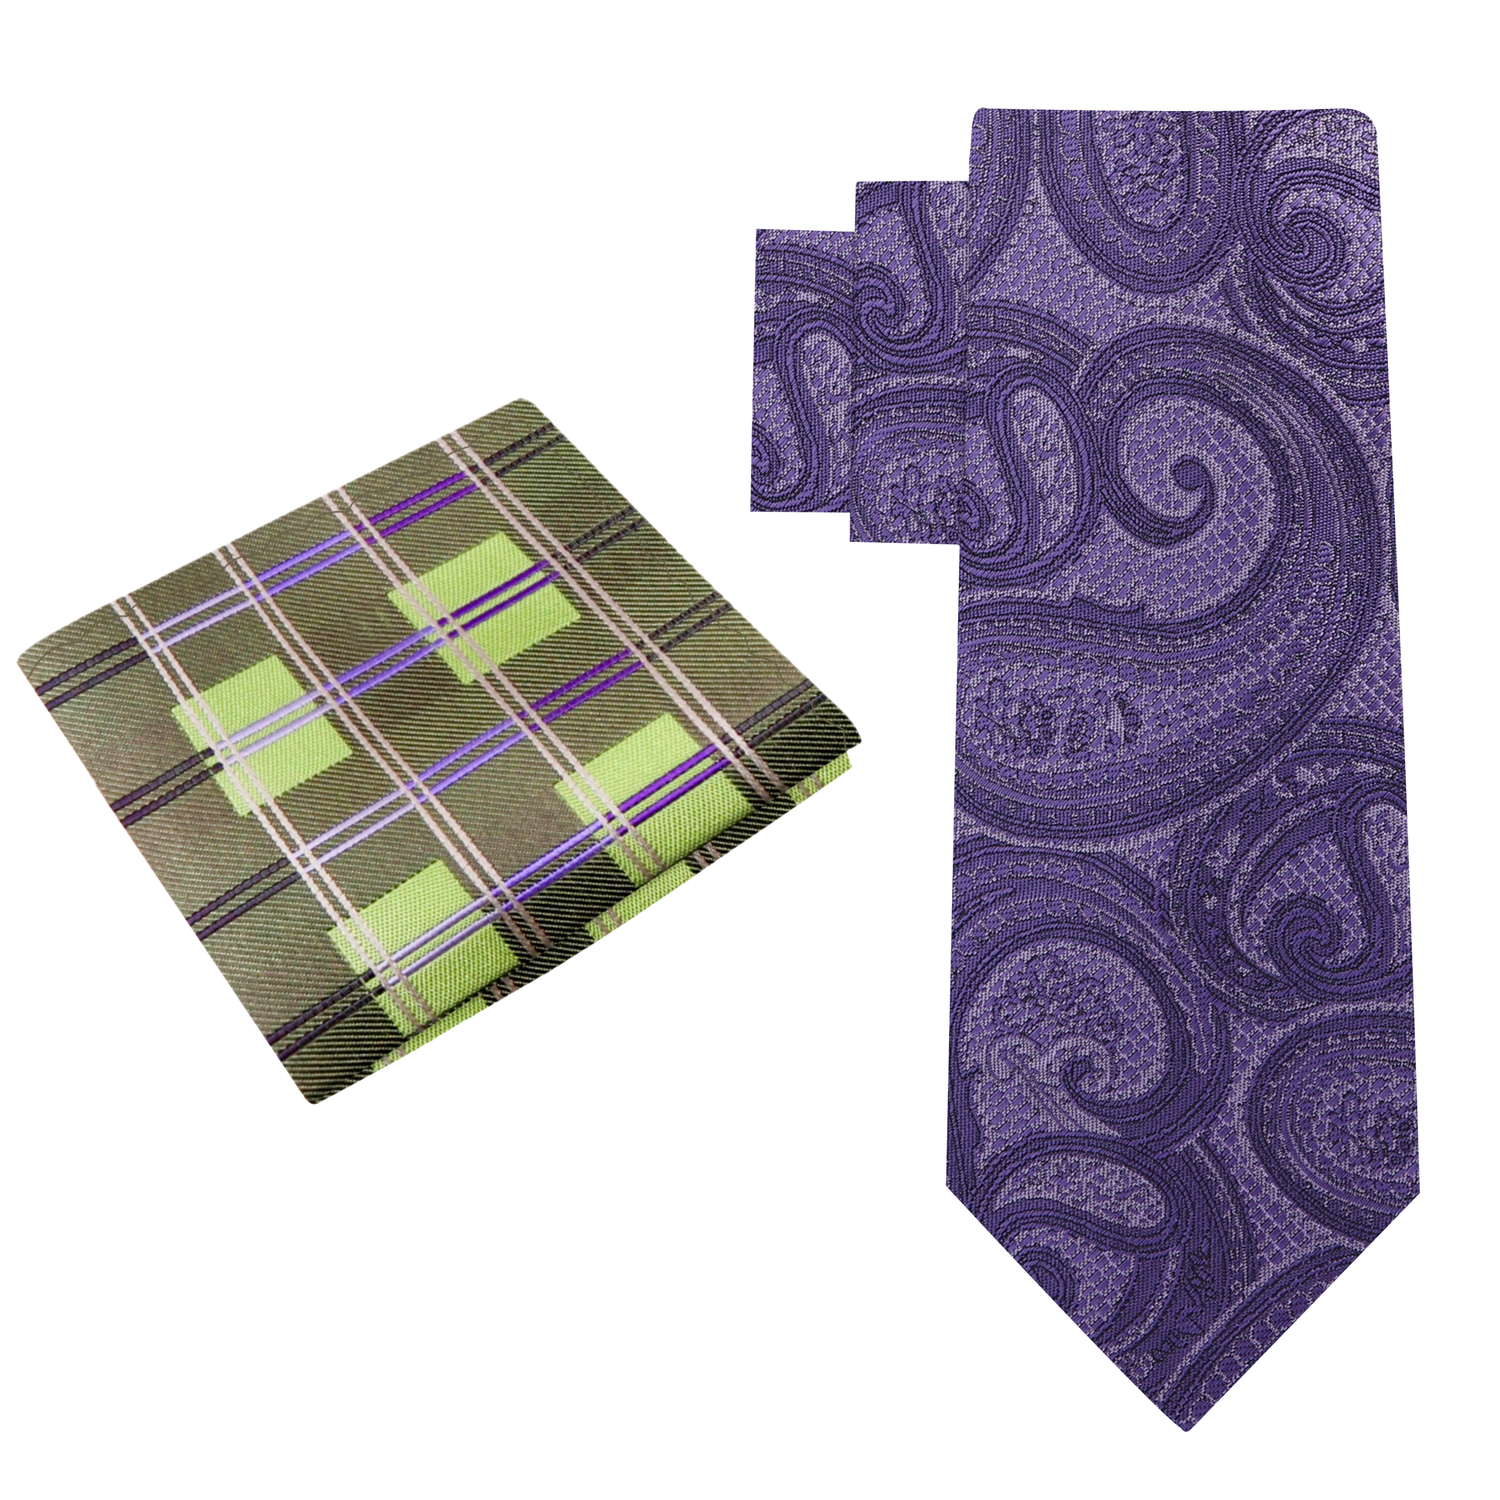 Alt View: Purple Paisley Necktie and Green Plaid Square